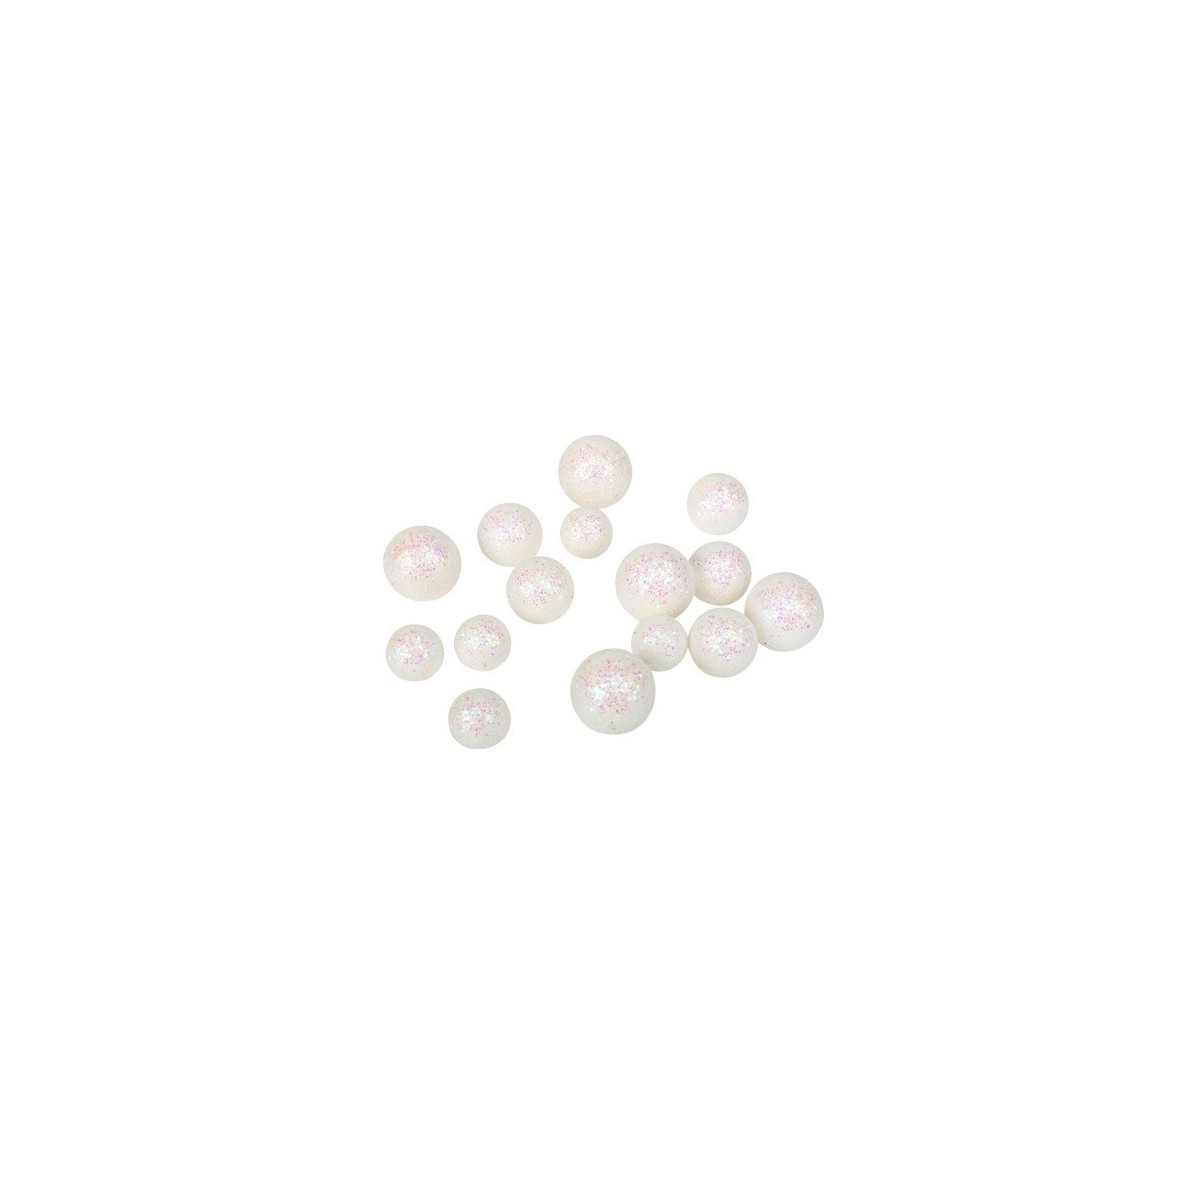 Boules polystyrène paillettes blanches